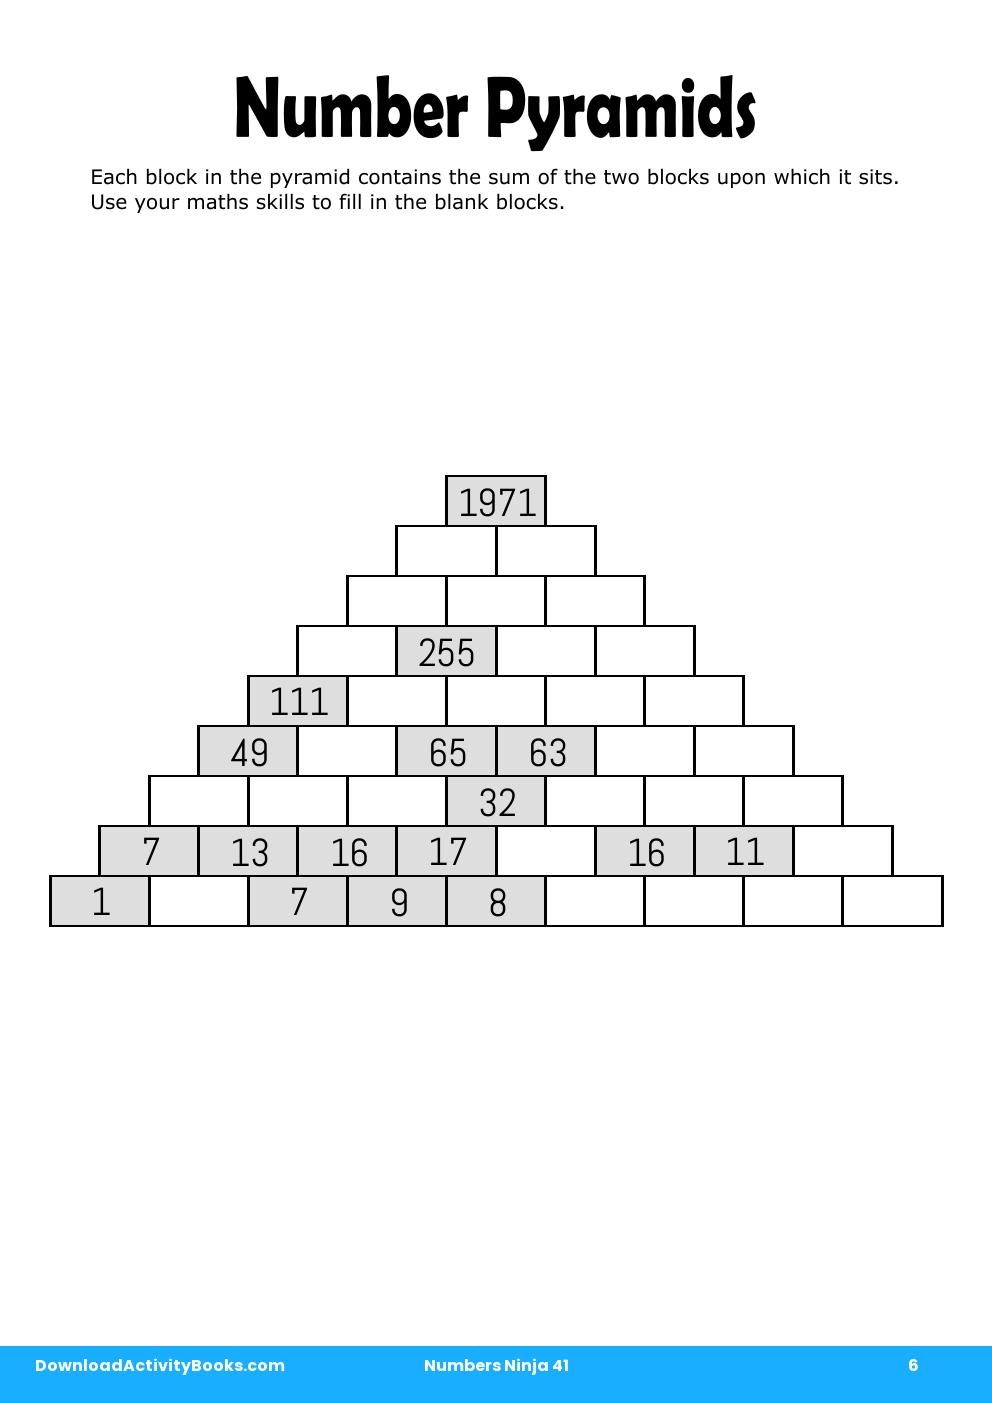 Number Pyramids in Numbers Ninja 41